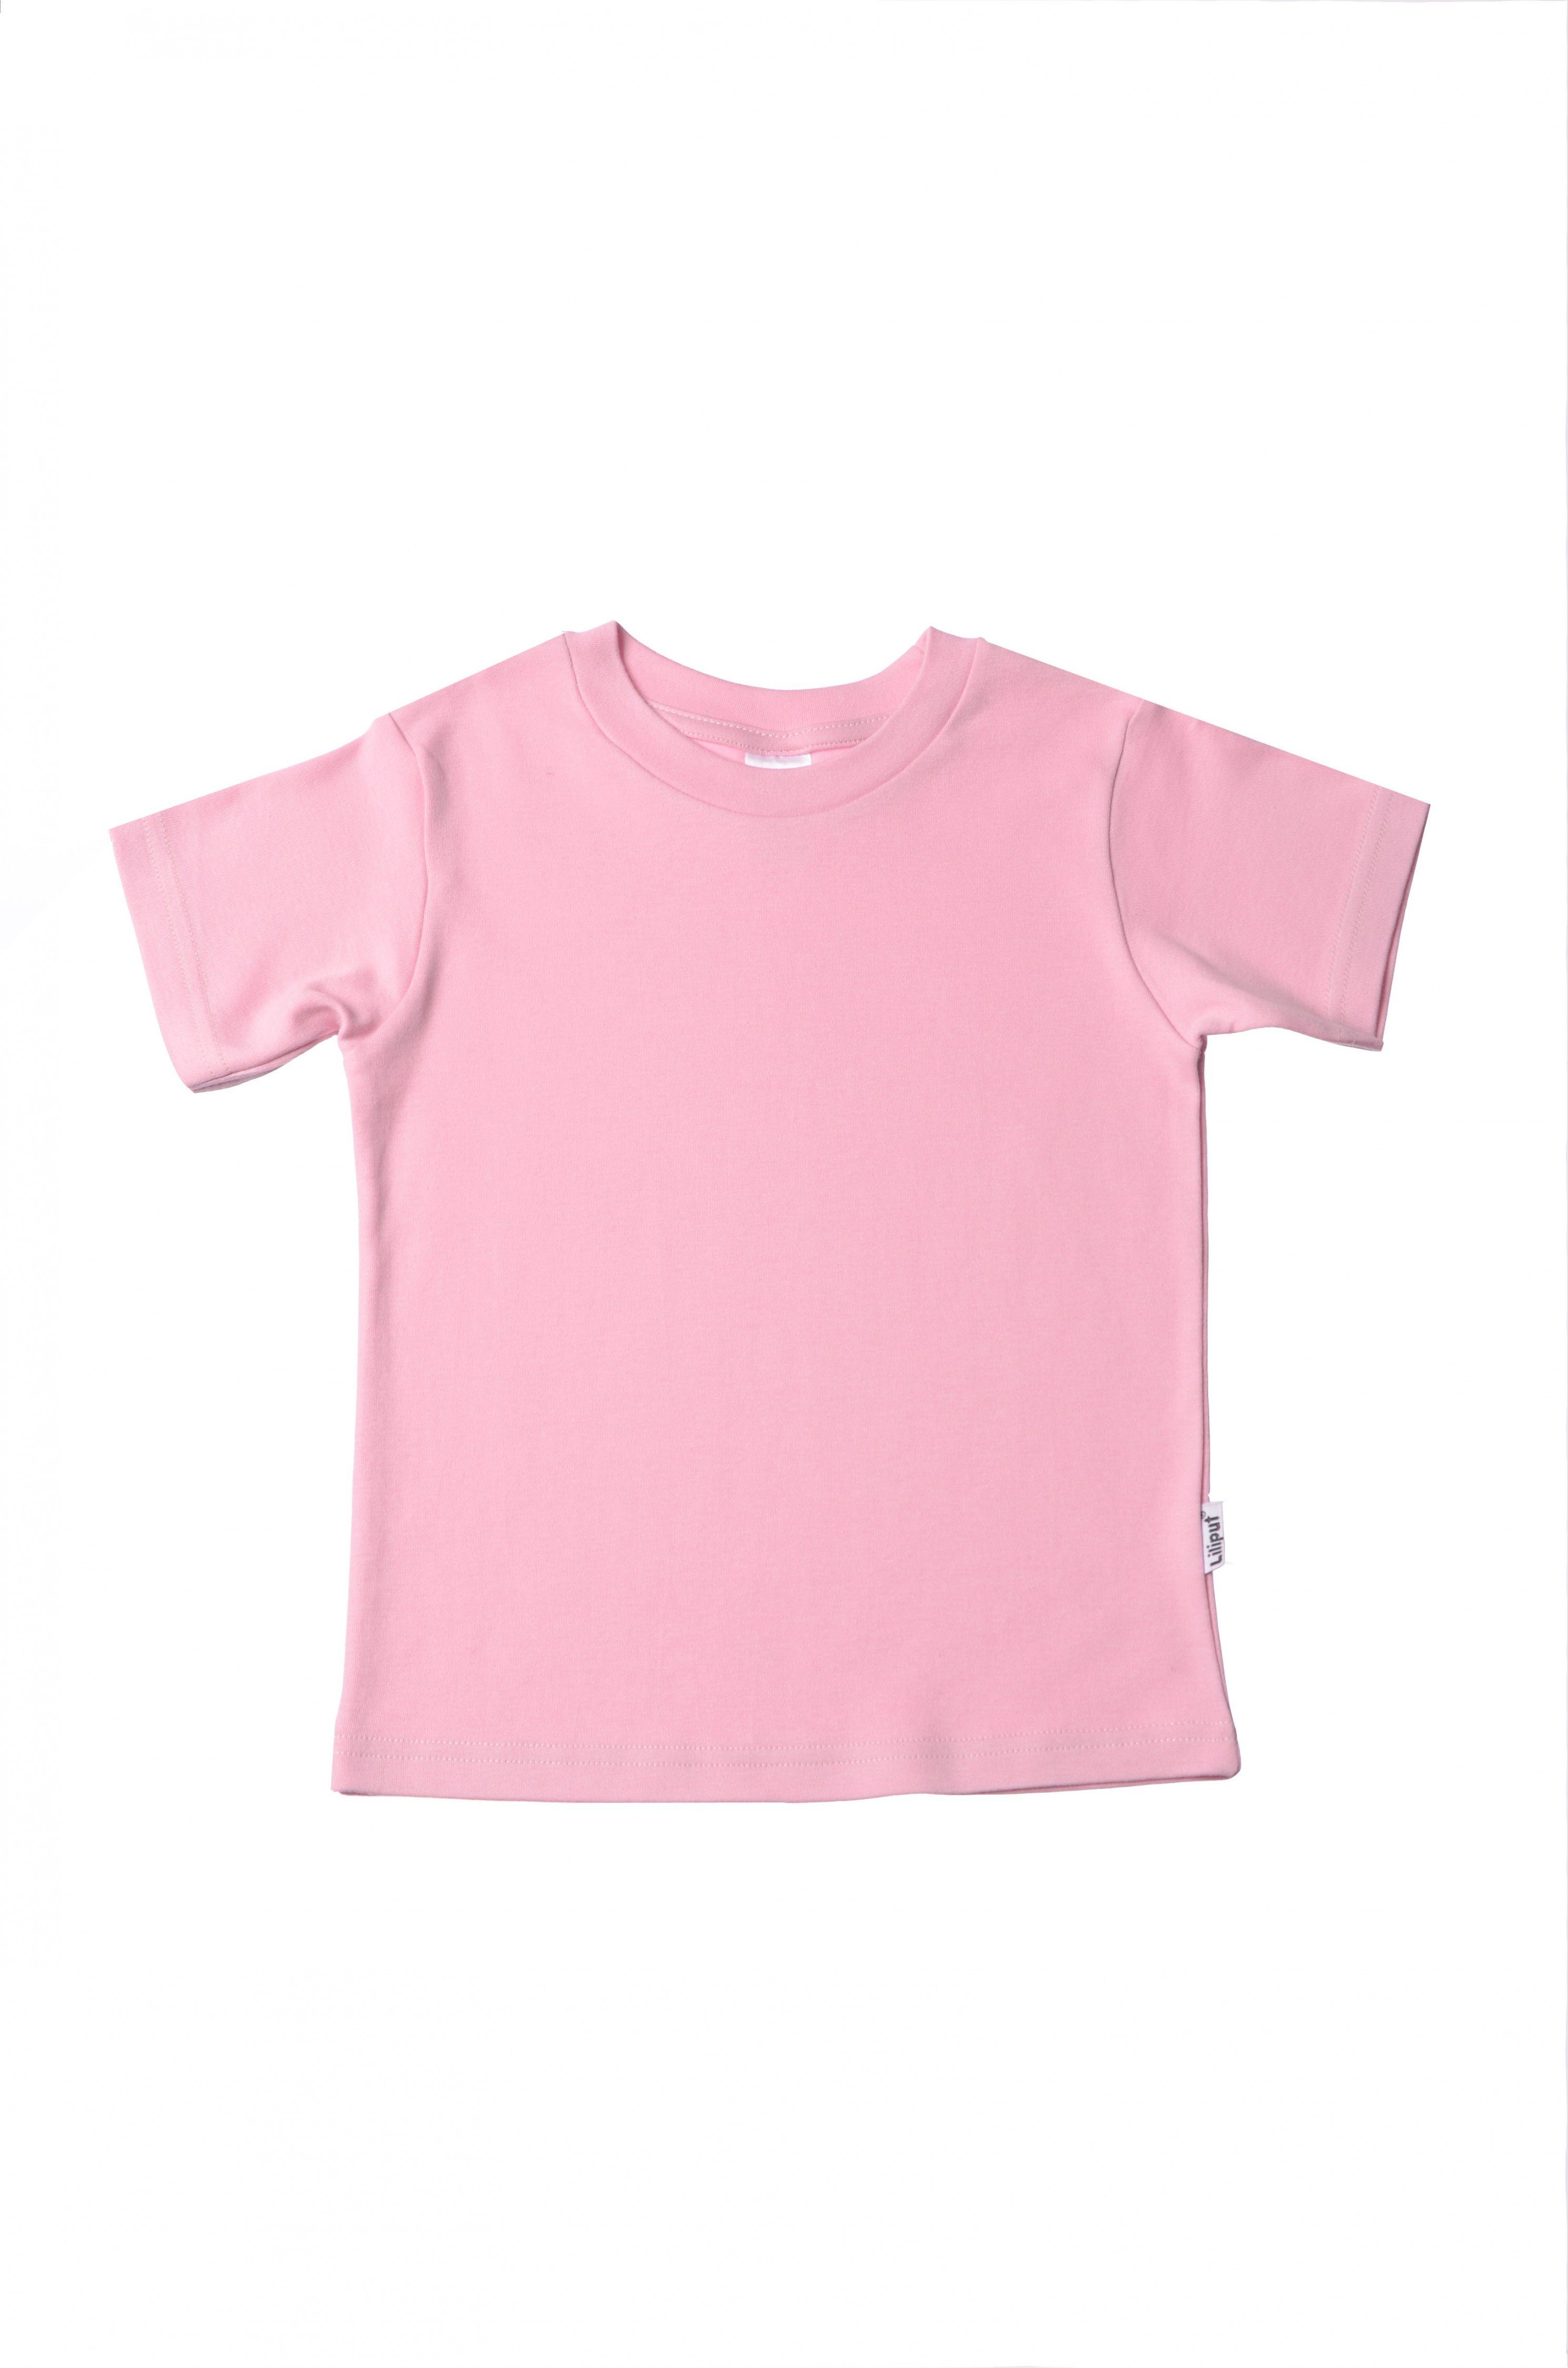 Liliput T-Shirt in niedlichem rosa Design